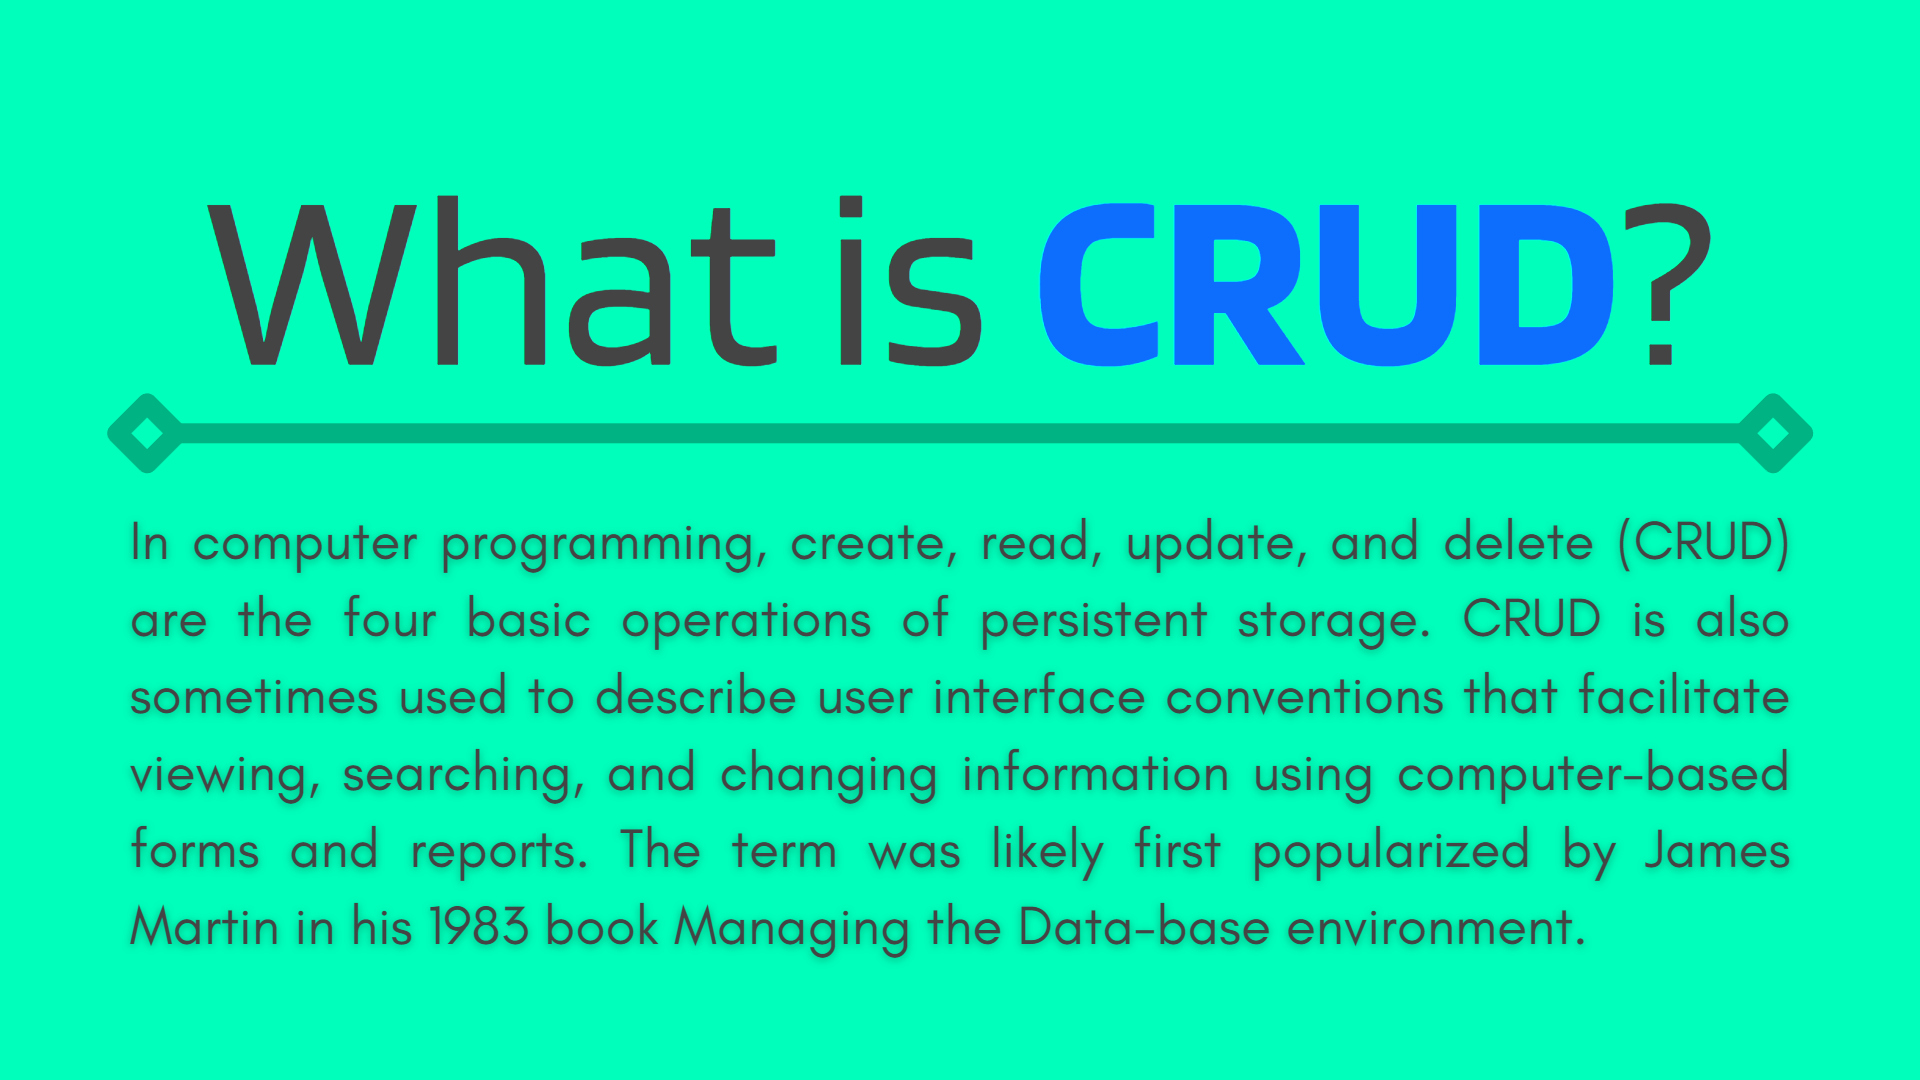 What is CRUD? Create, Read, Update, Delete